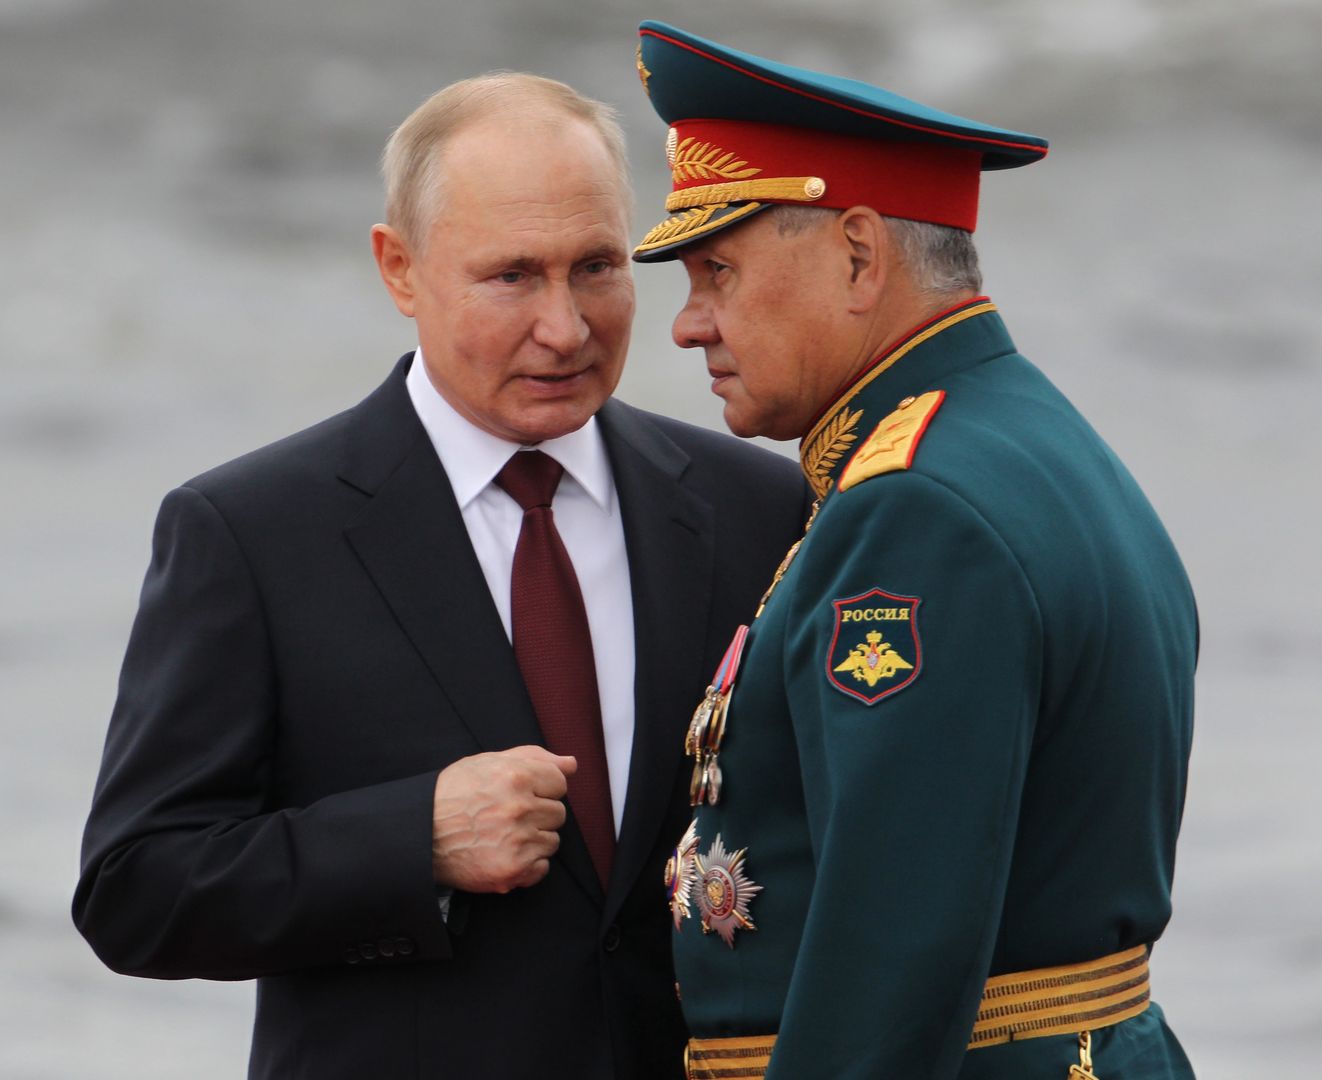 "Żądam usunięcia Putina". Apel w Rosji